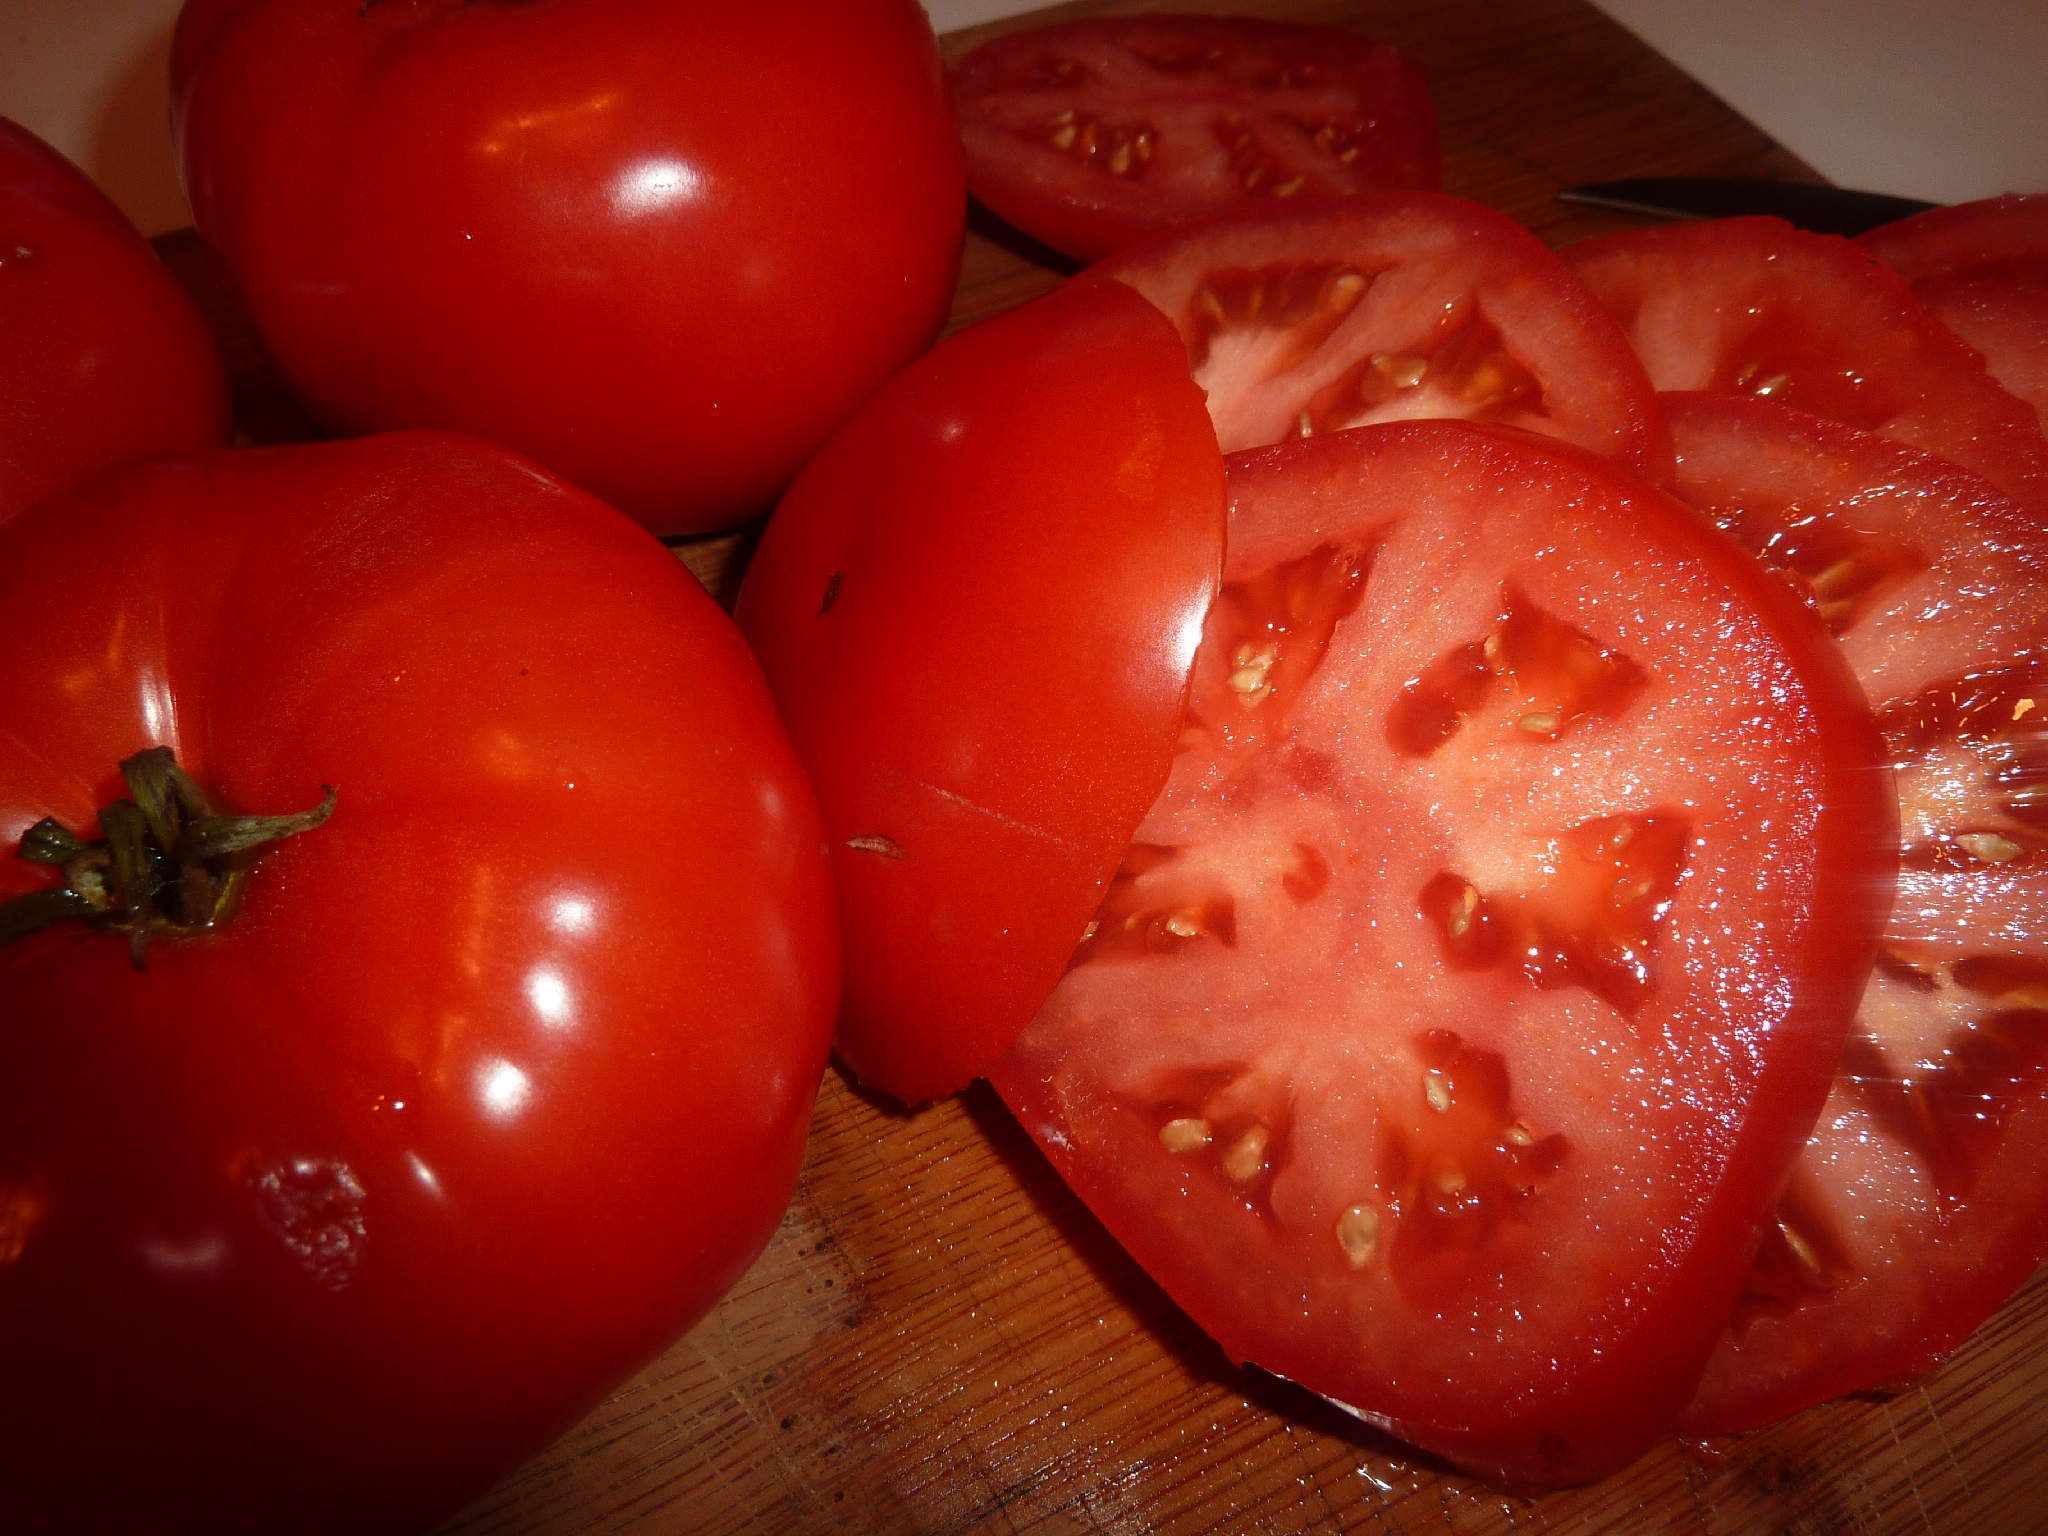 These are tomatoes. Помидоры домашние. Томат бифштекс. Резаные помидоры домашний. Косточки помидора.